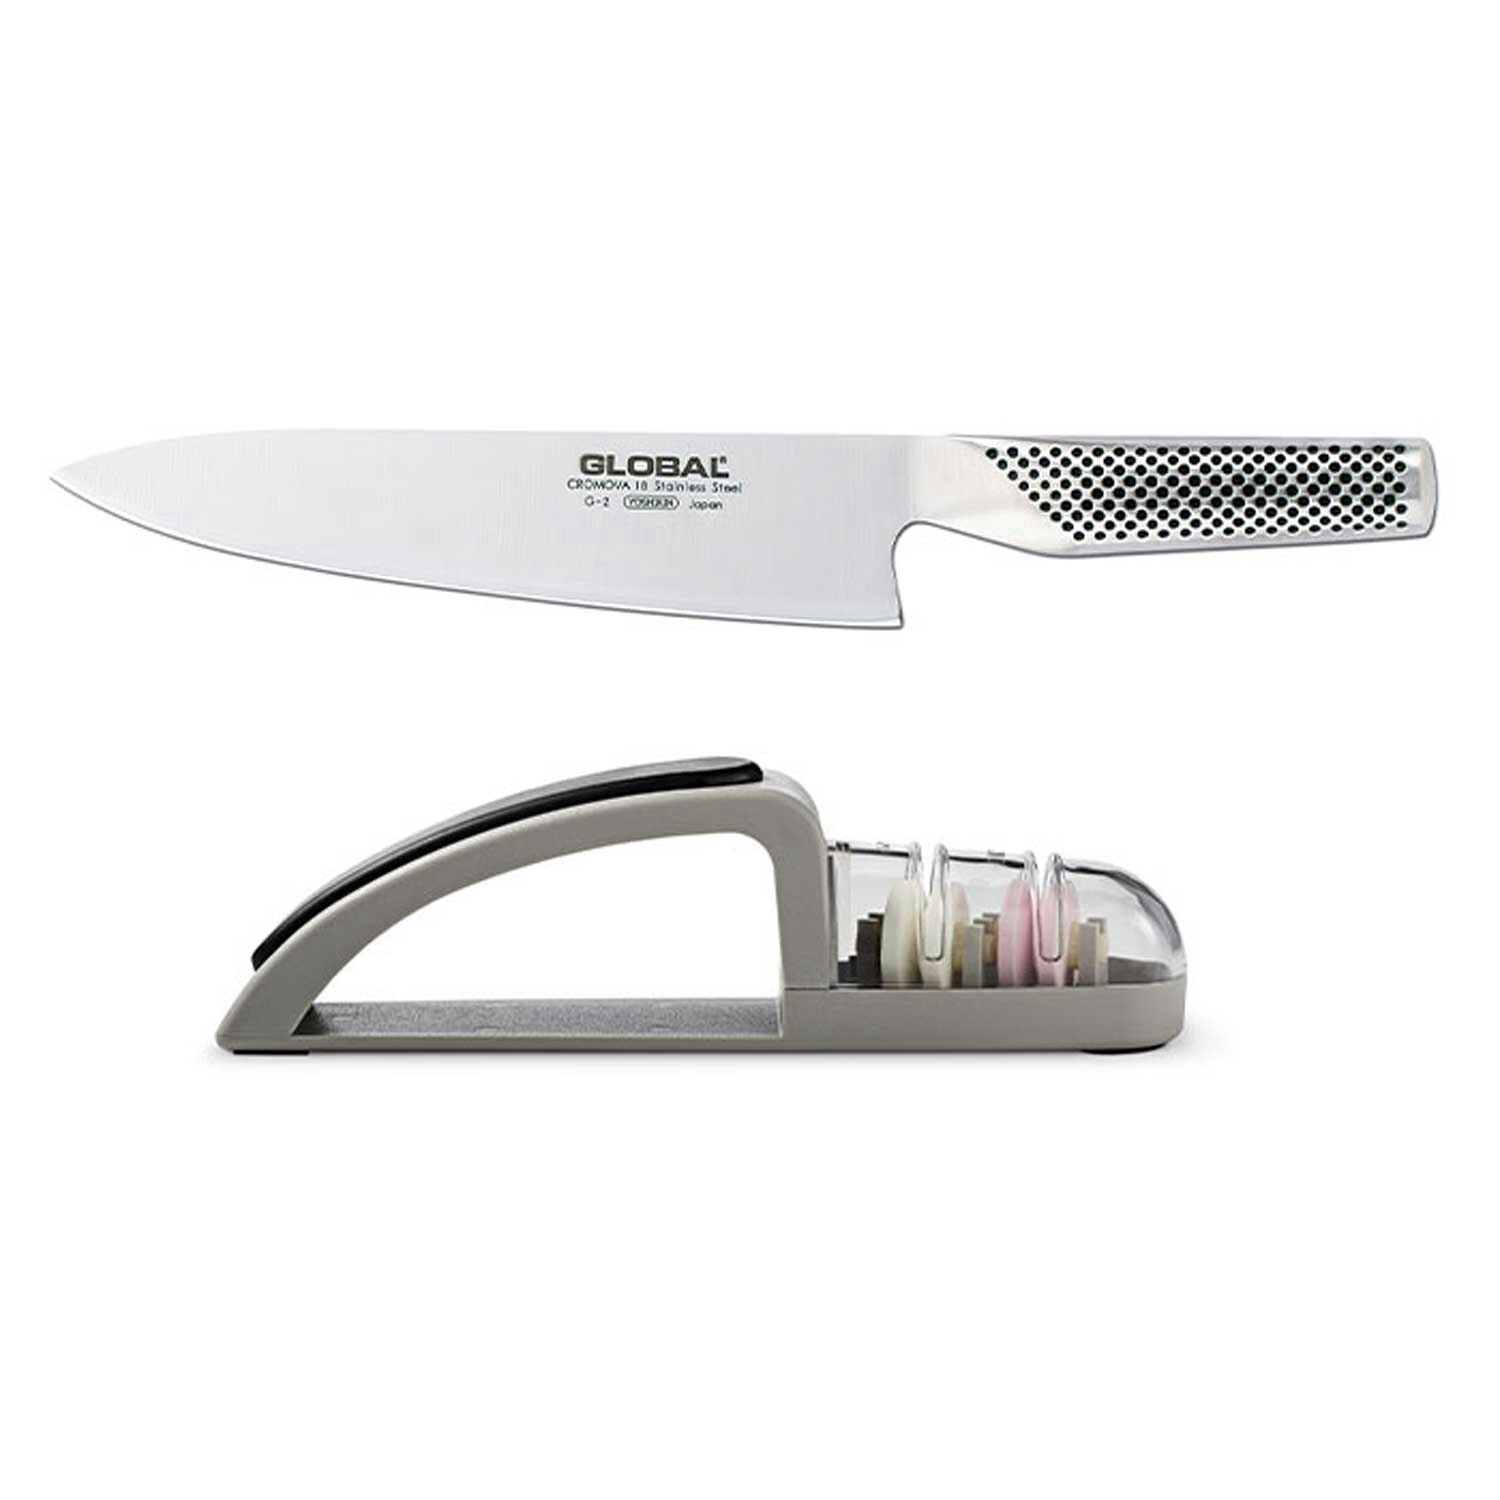 Global Kockkniv + Våtslip - Knivslipar, slipstål & brynen Rostfritt Stål